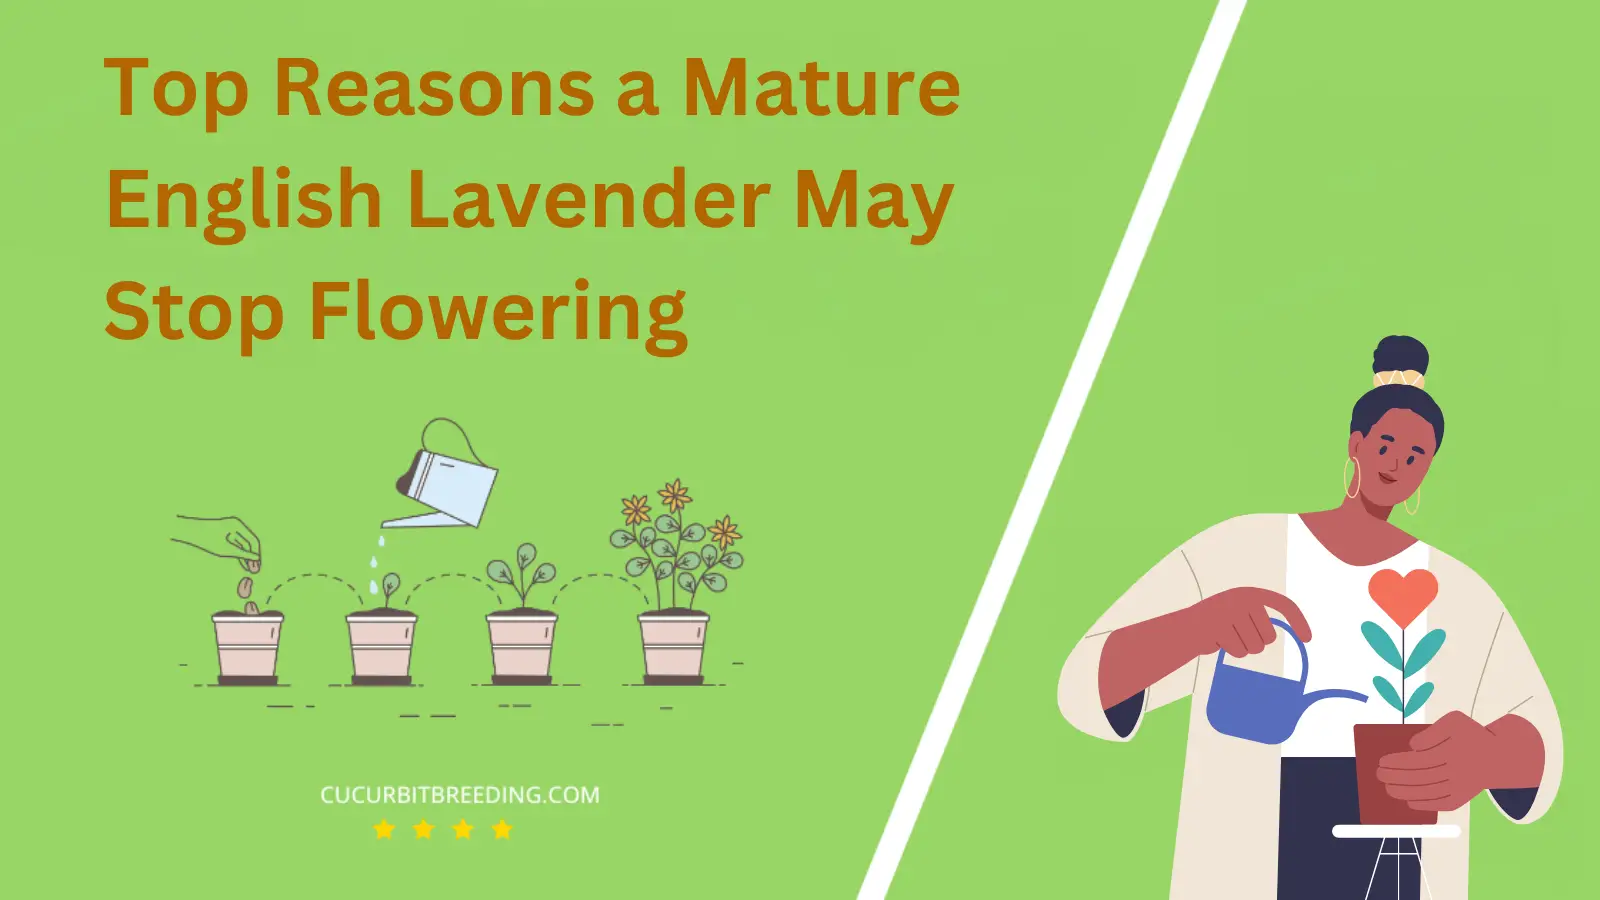 Top Reasons a Mature English Lavender May Stop Flowering